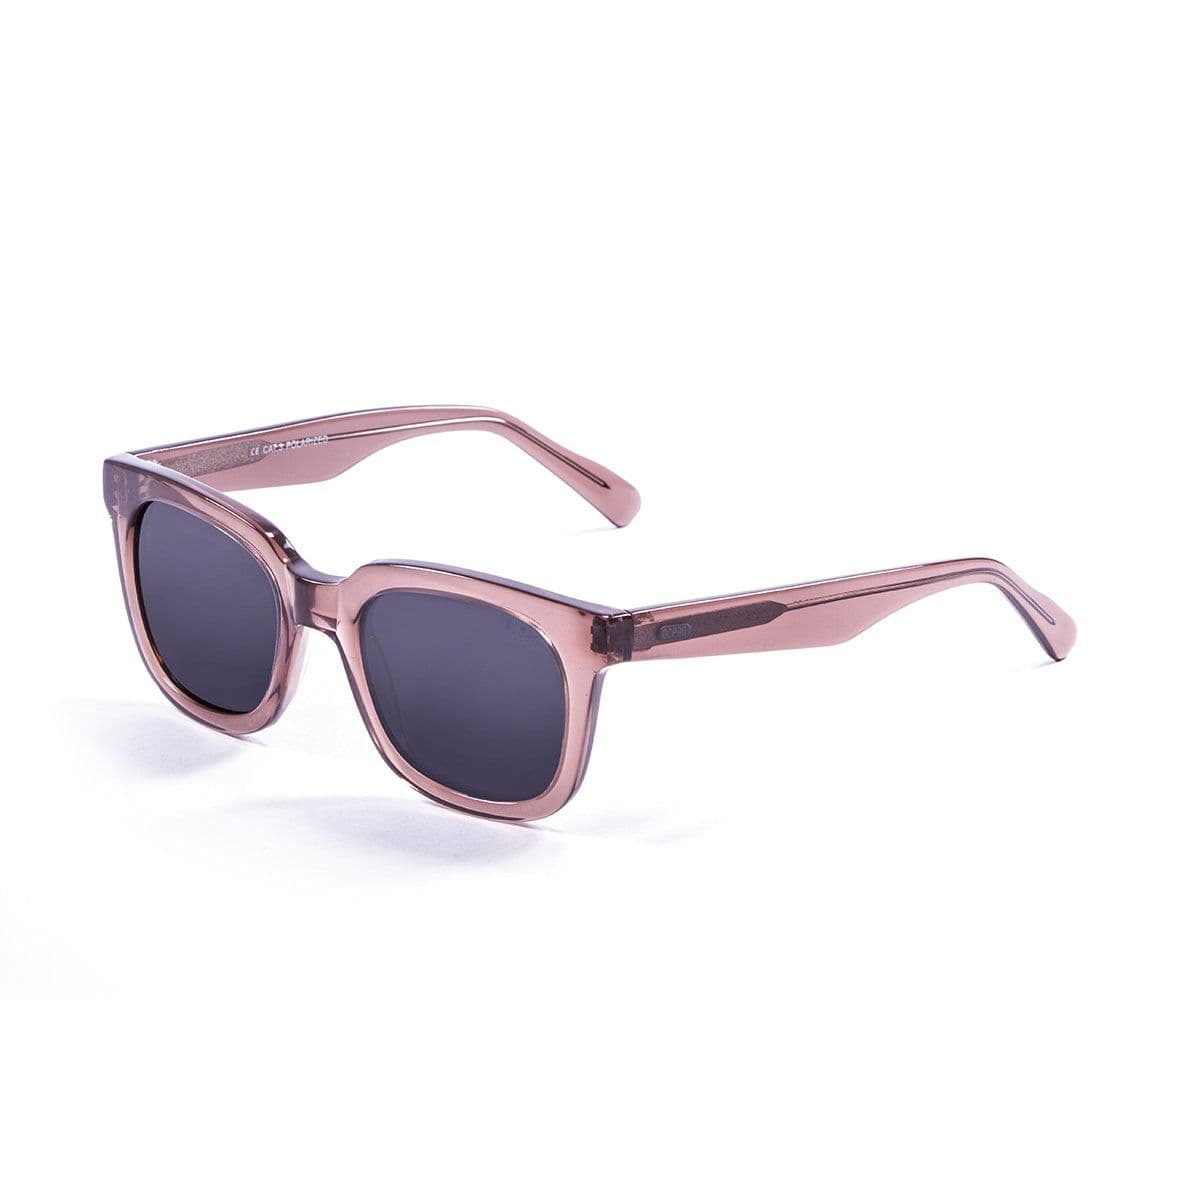 Ocean San Clemente Sunglasses